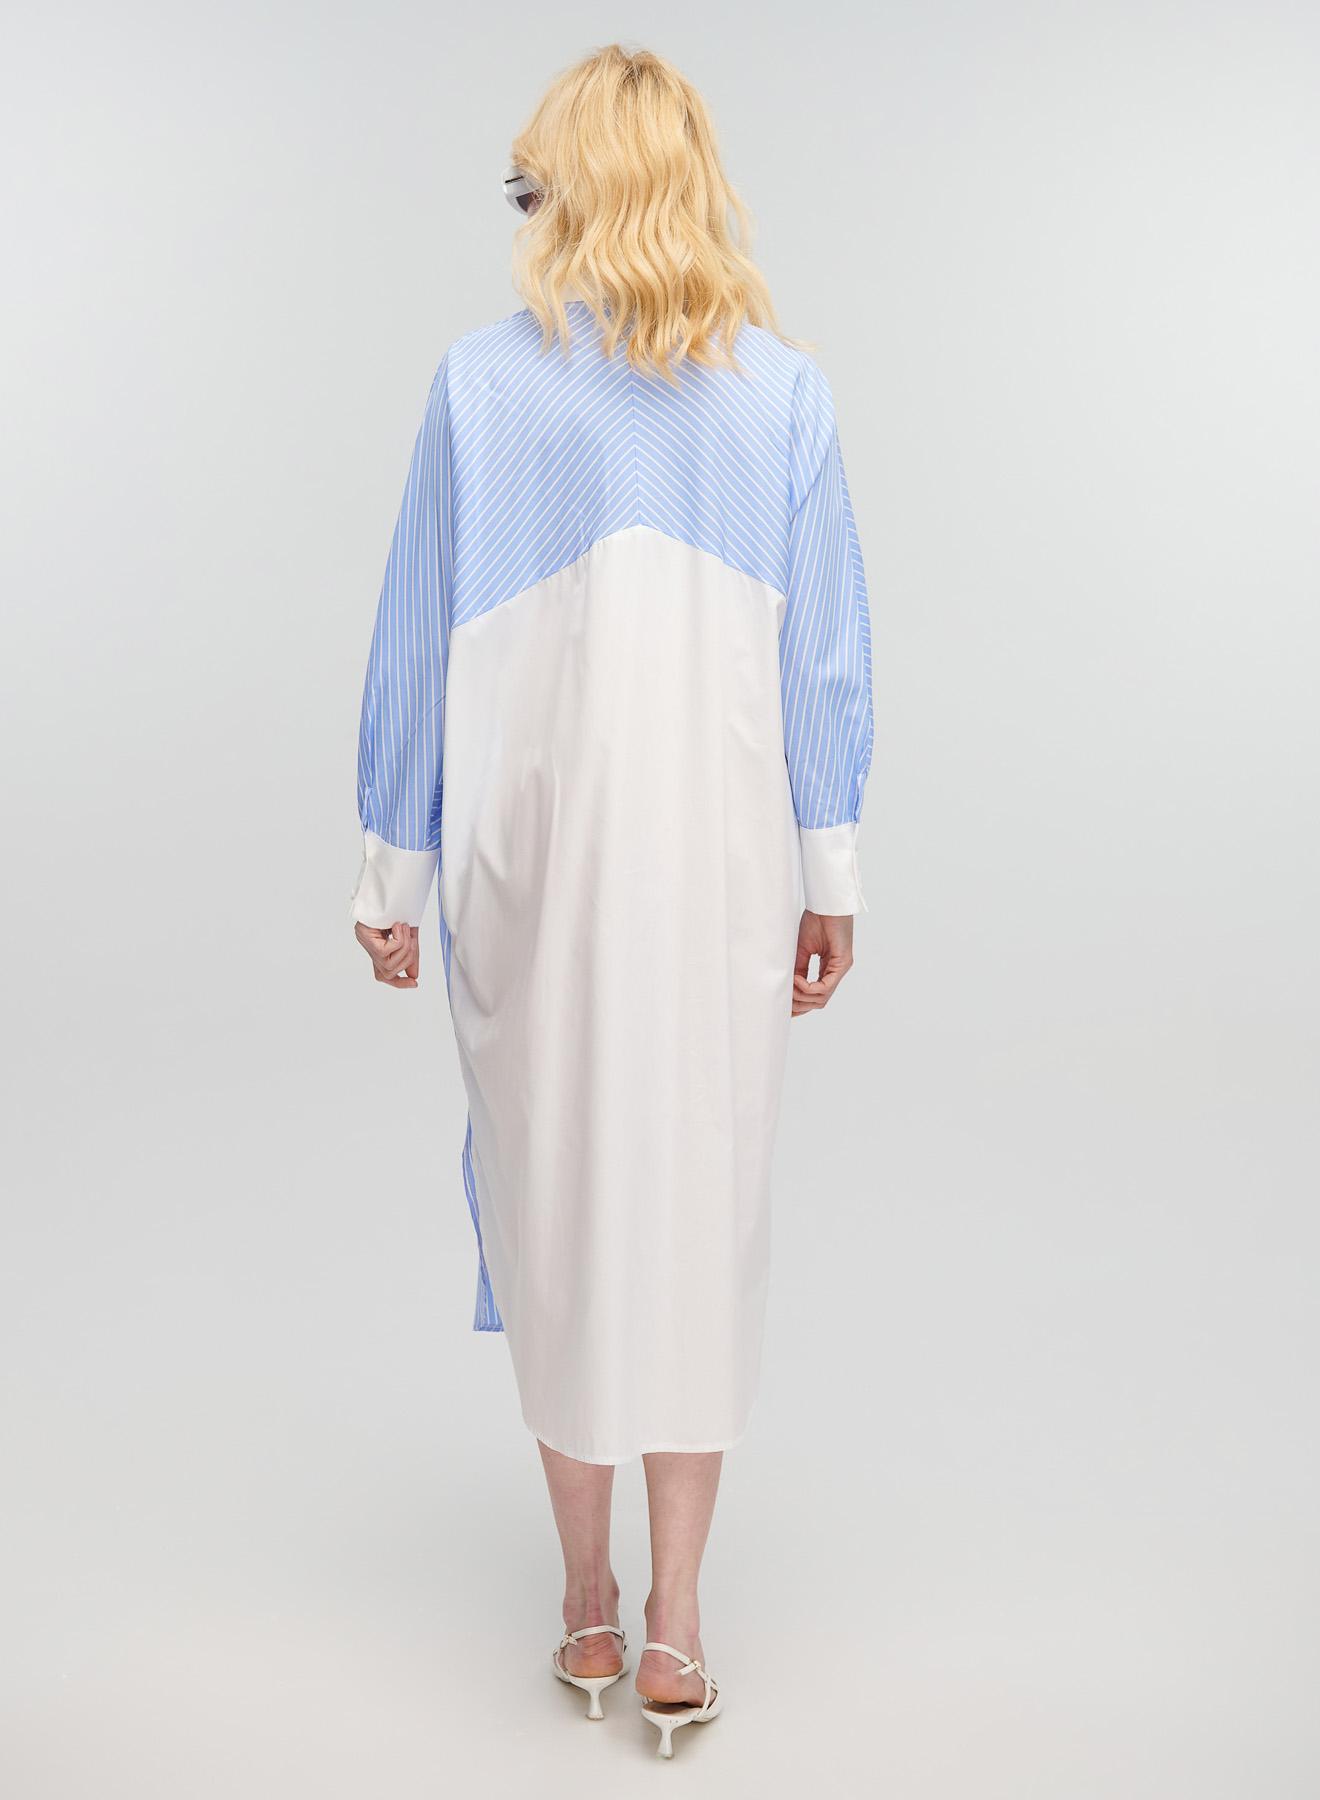 Light Blue-White asymmetrical Dress with stripes Milla - 5